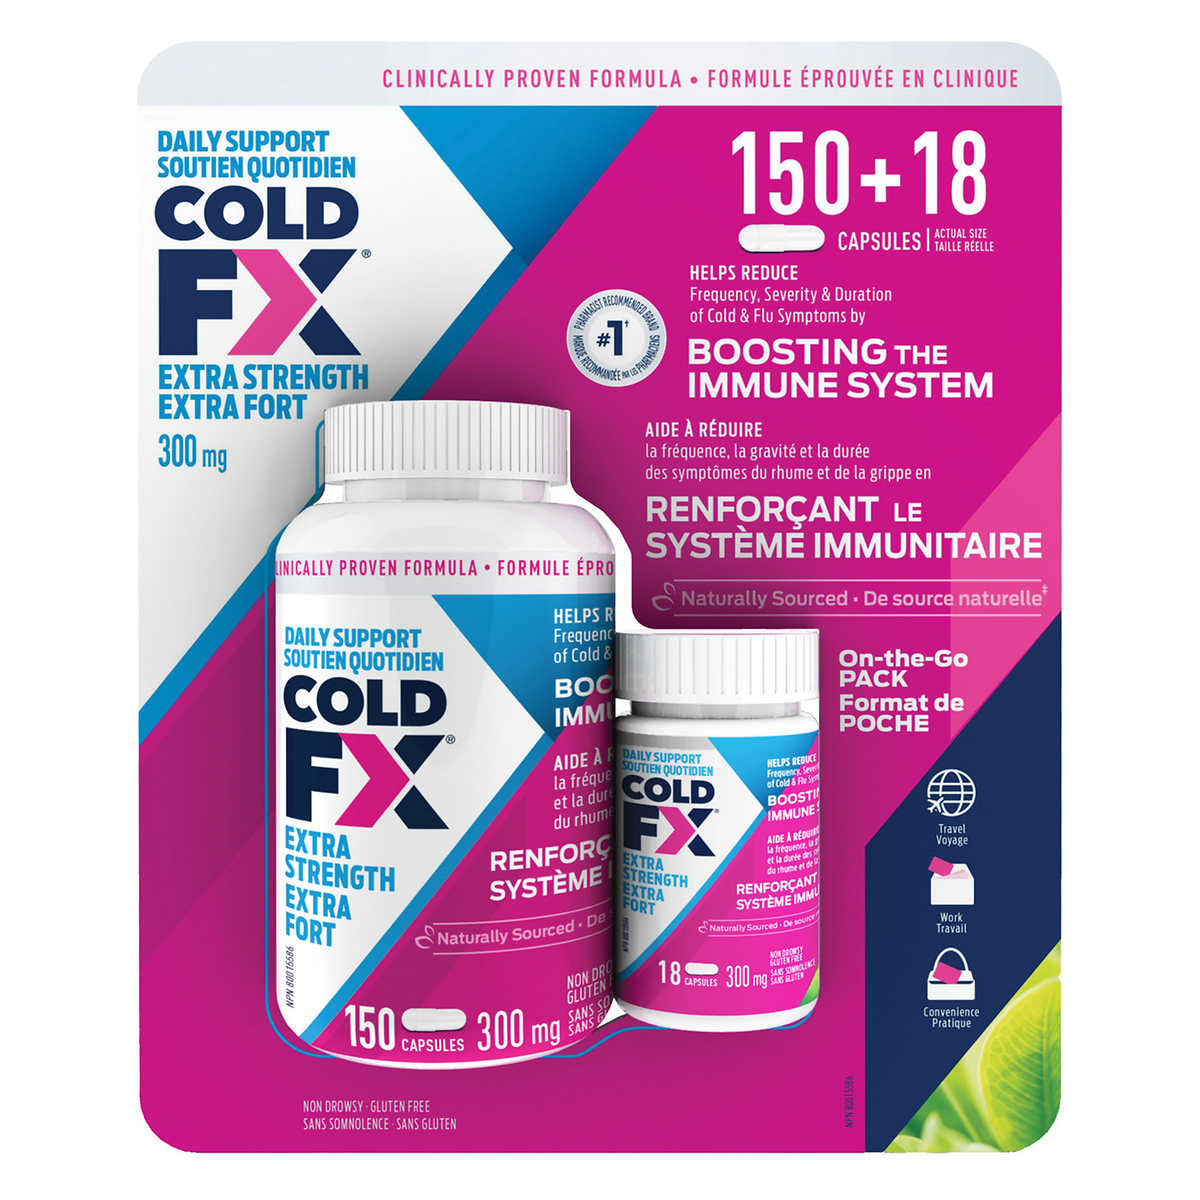 COLD-FX Extra Strength 300 mg - 150 + 18 capsules - canavitam